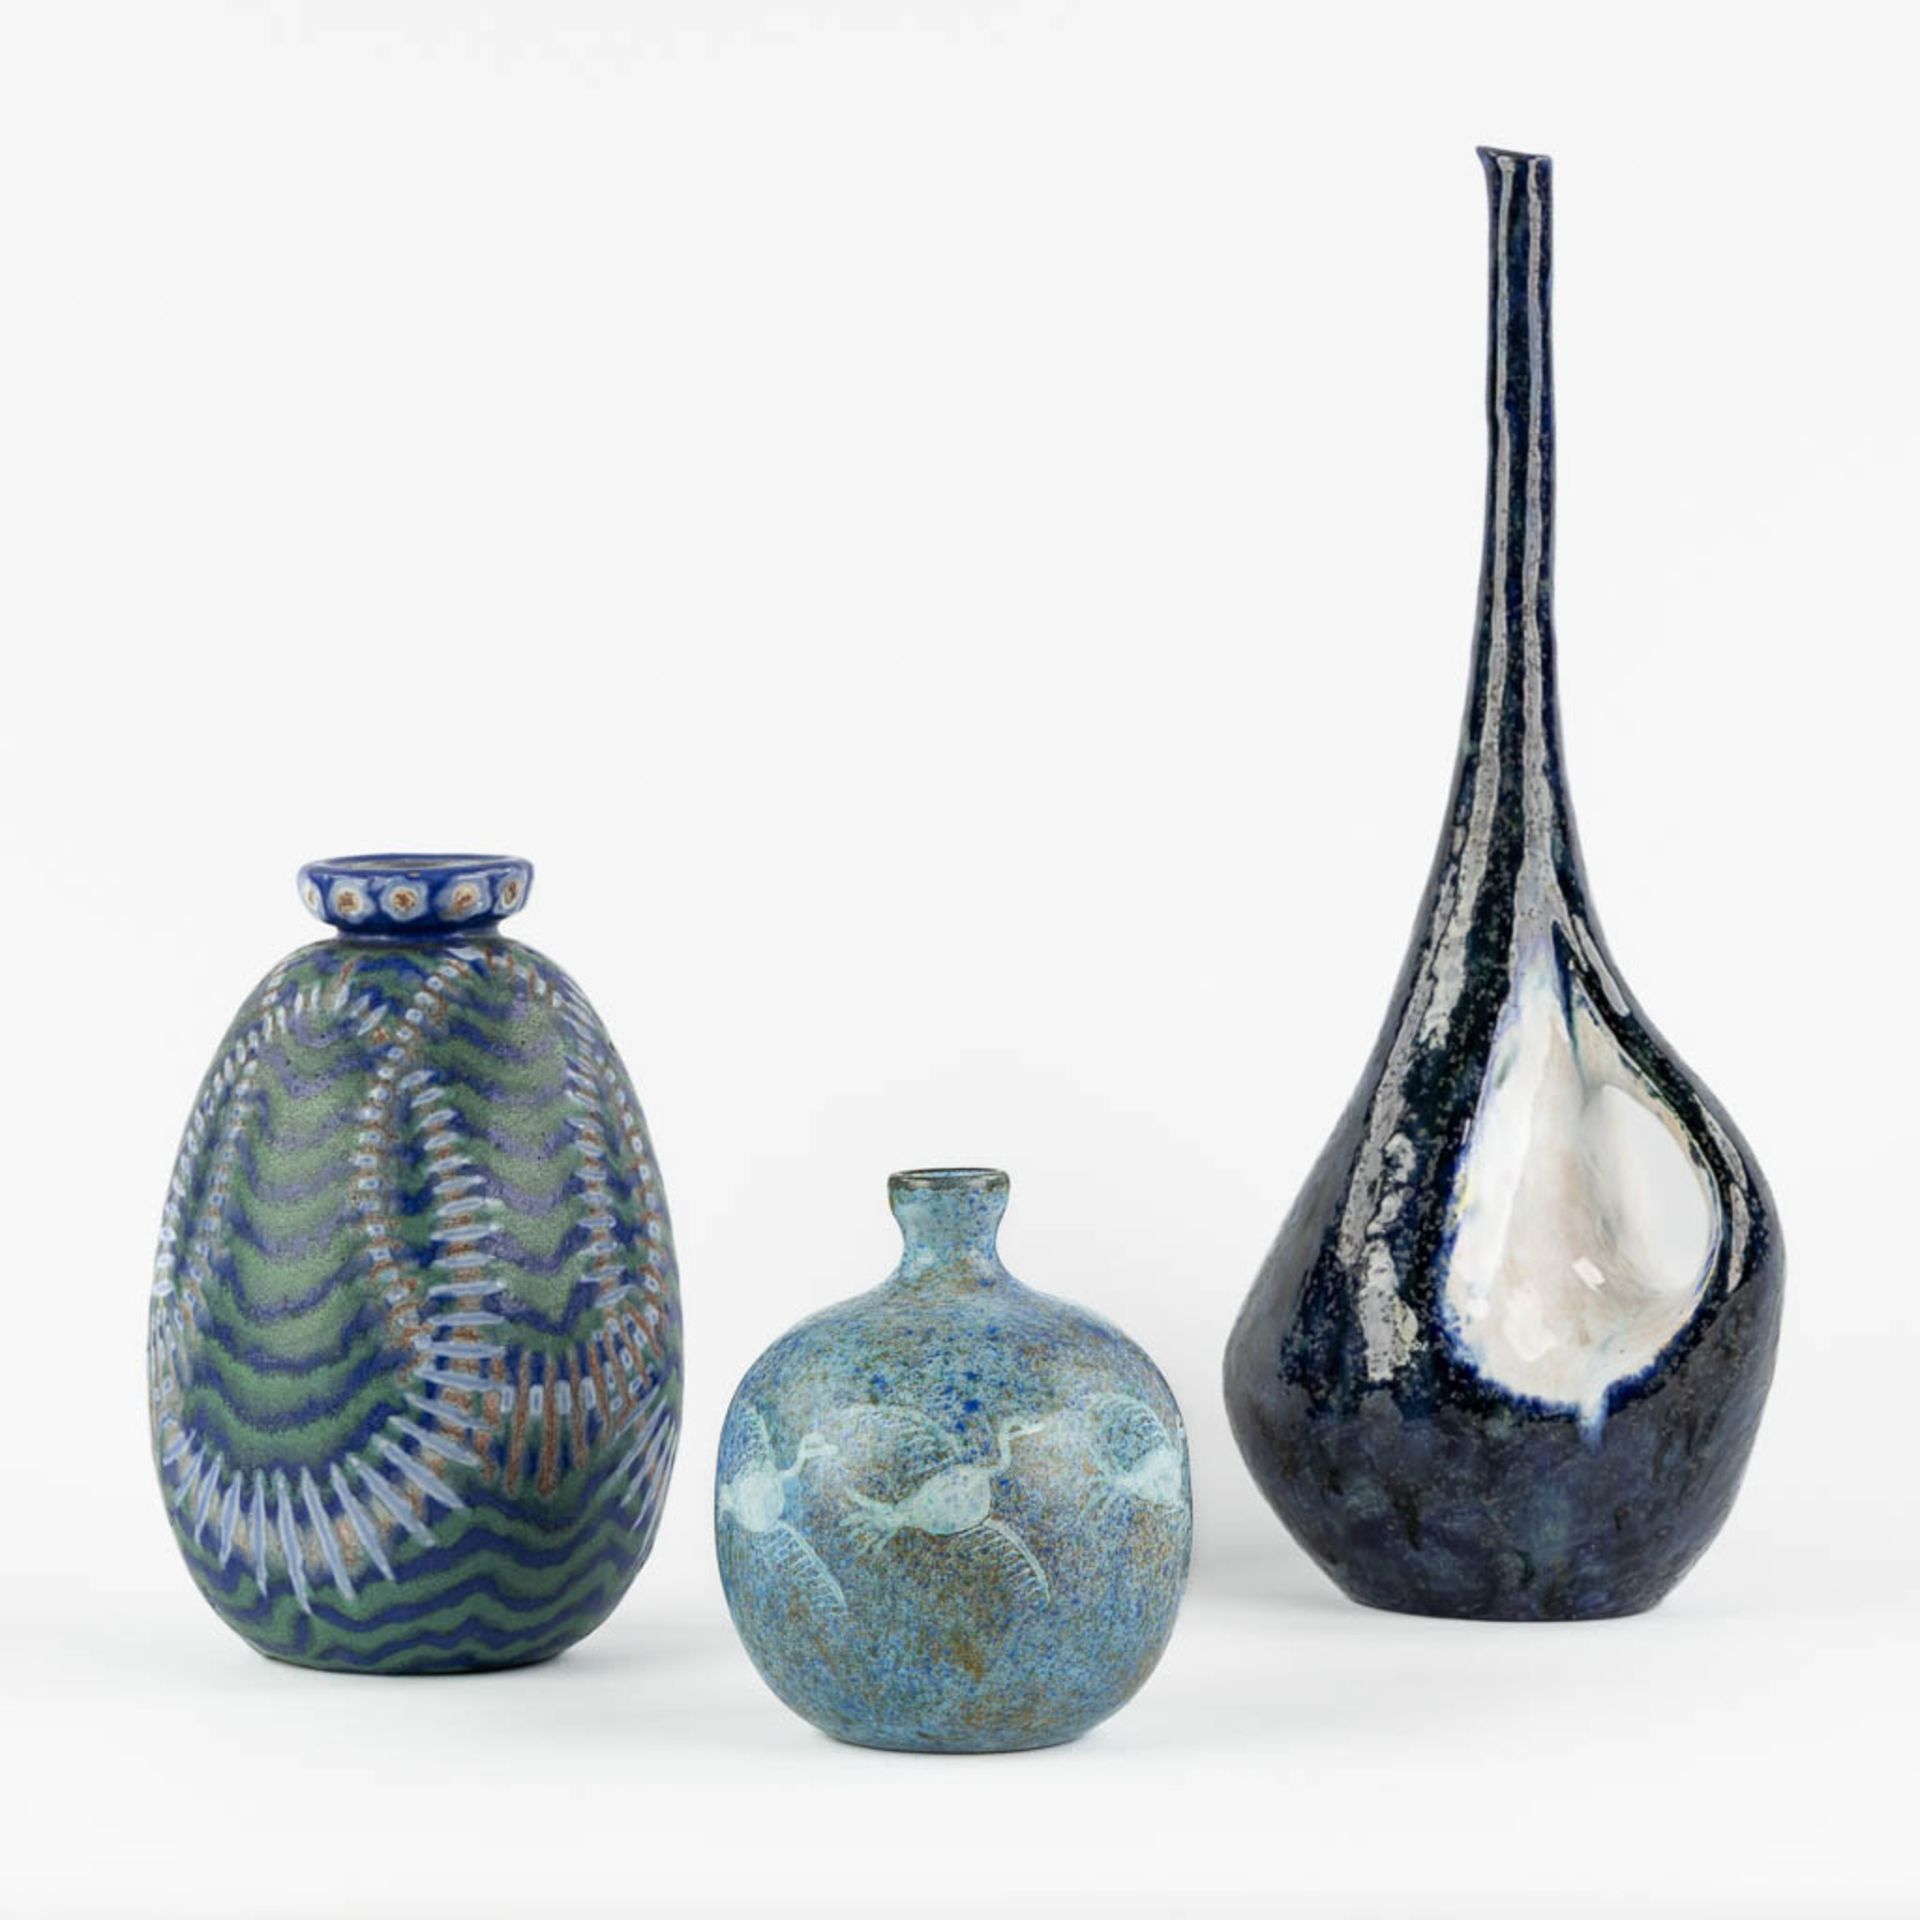 Three ceramic vases with a blue glaze. Revernay, Bertocci en Vallauris. Circa 1960. (L:13 x W:16 x H